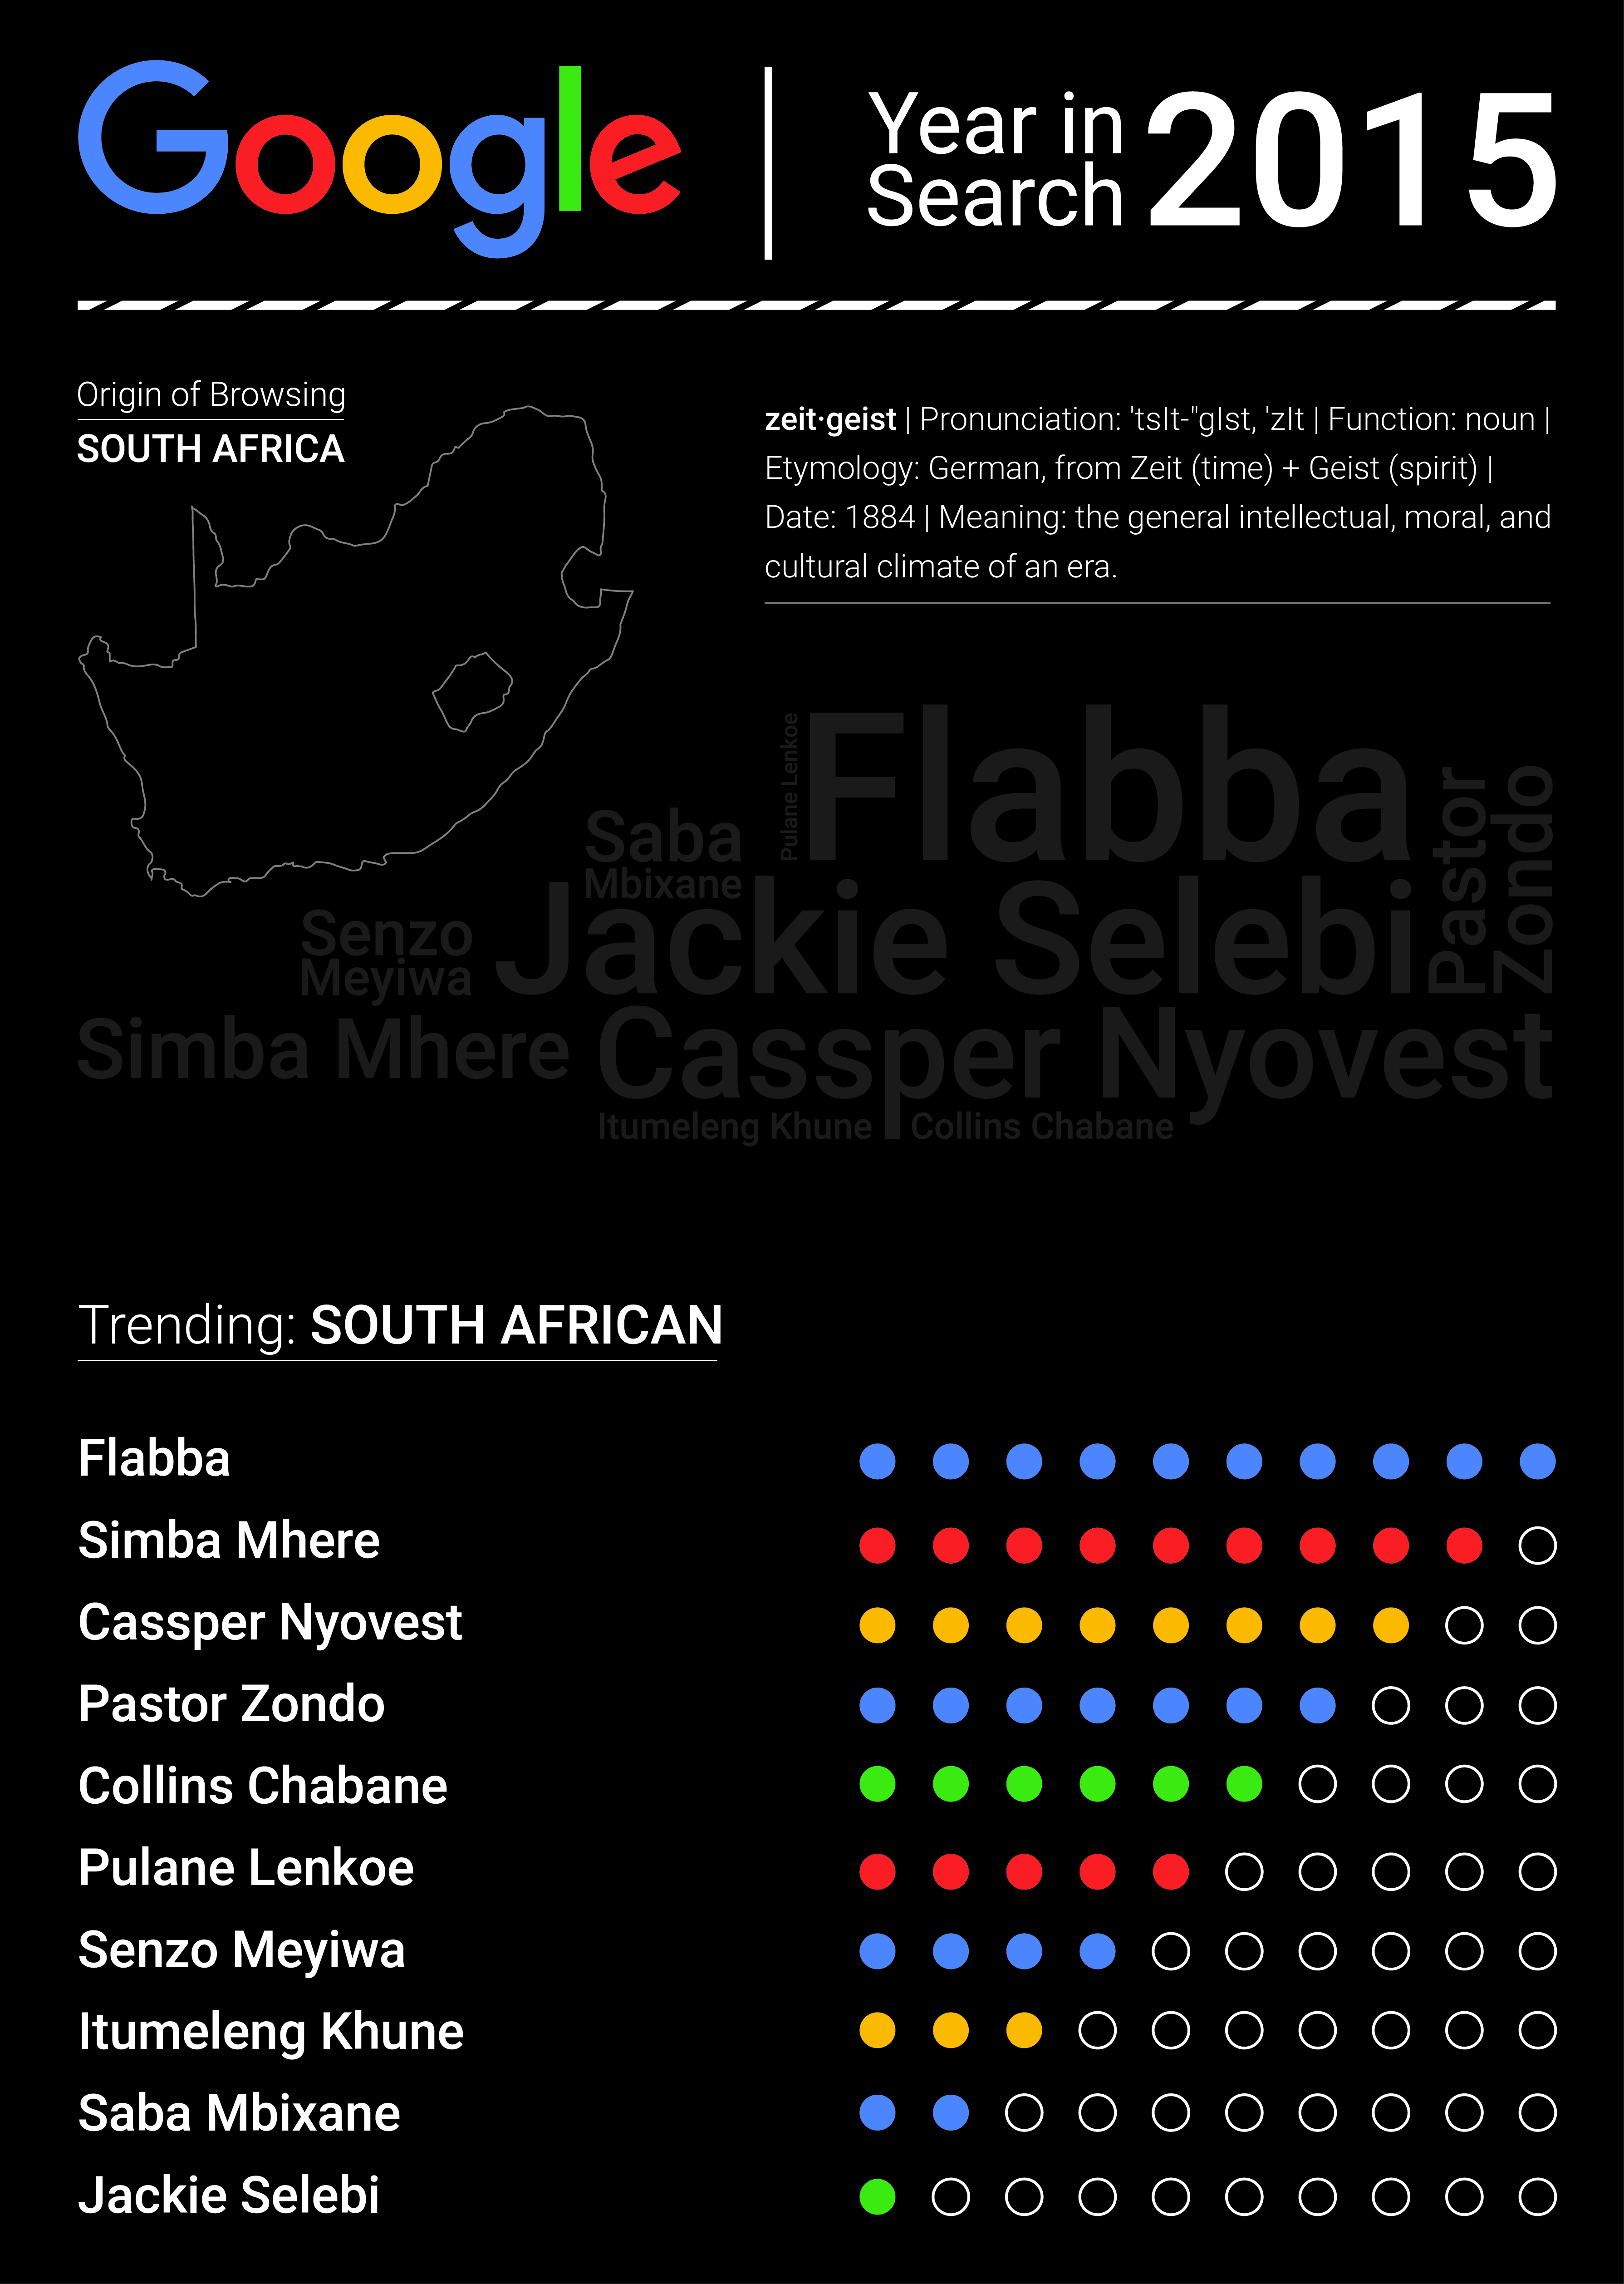 Google - Year End Zeitgeist 2015 trending South African